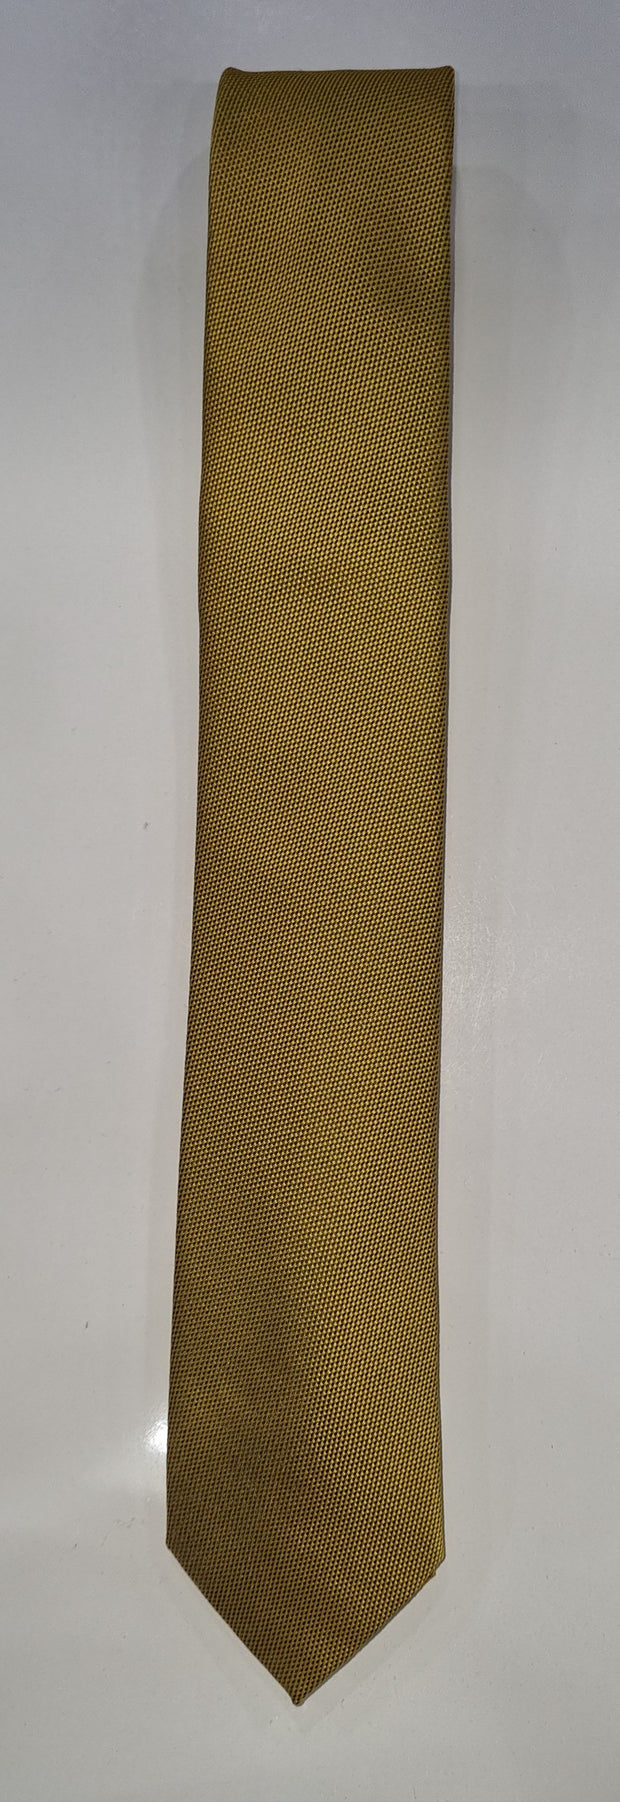 Birdseye Gold Tie